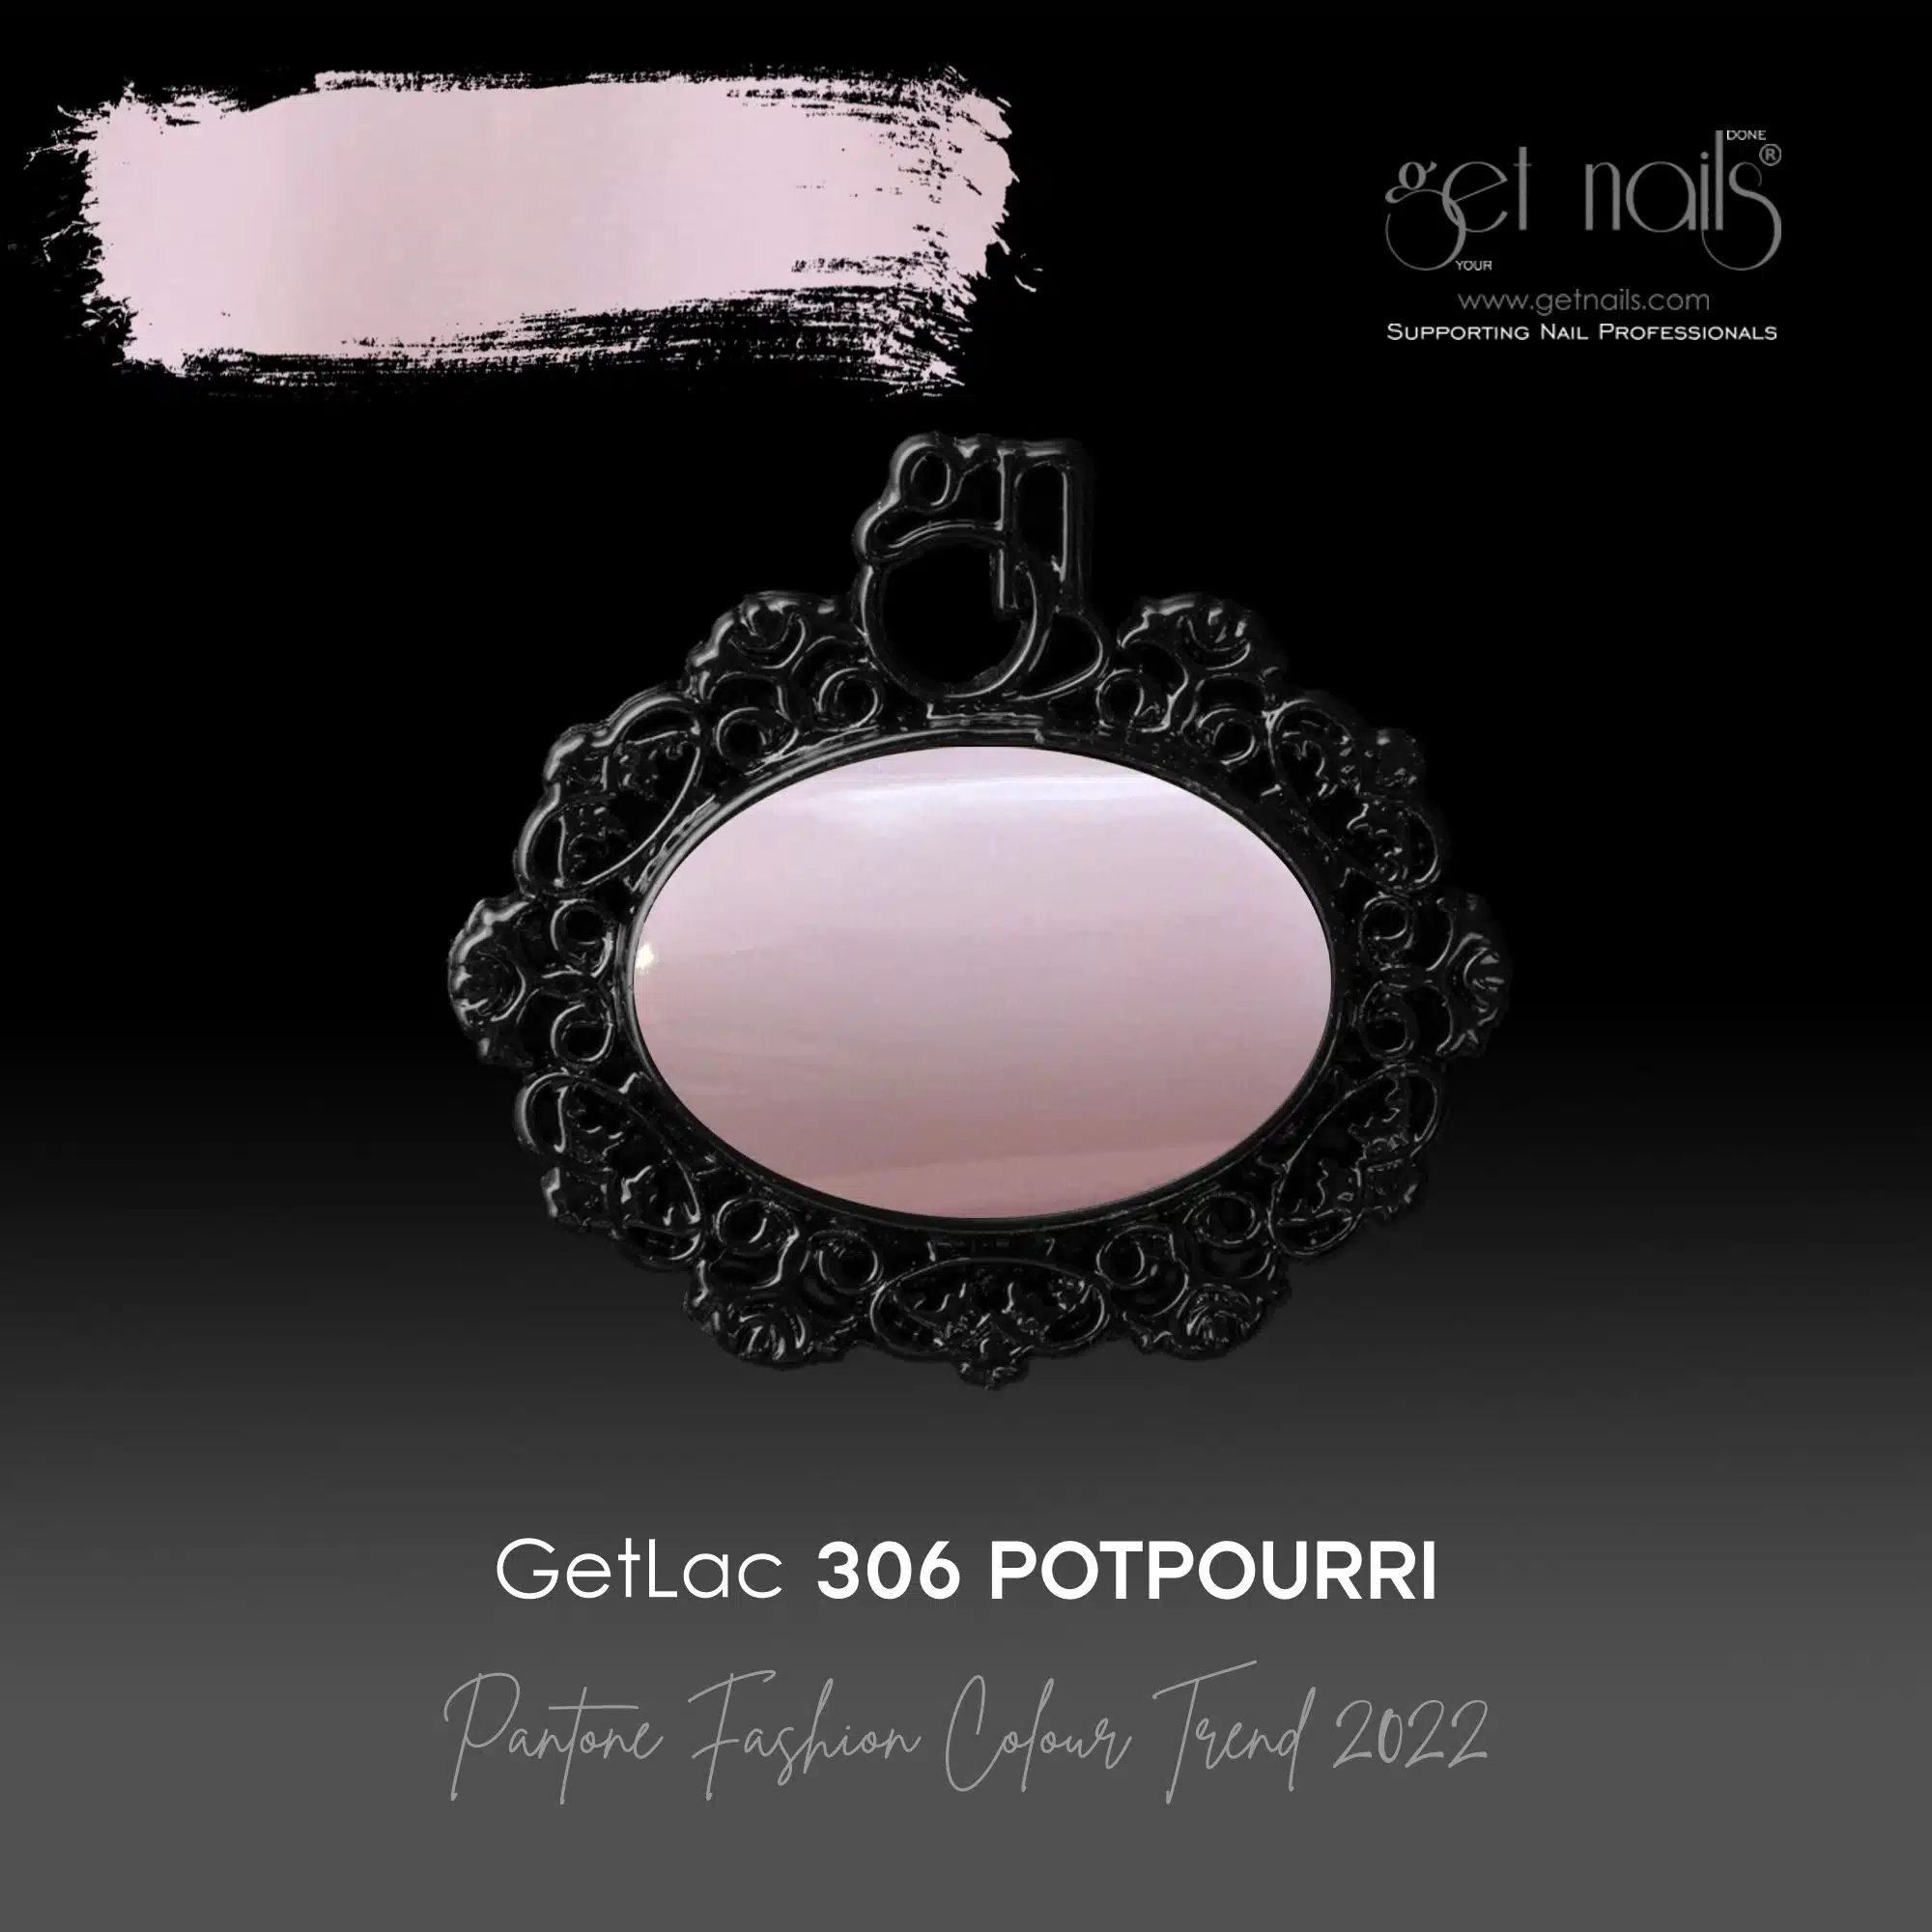 Get Nails Austria - GetLac 306 Potpourri 15g